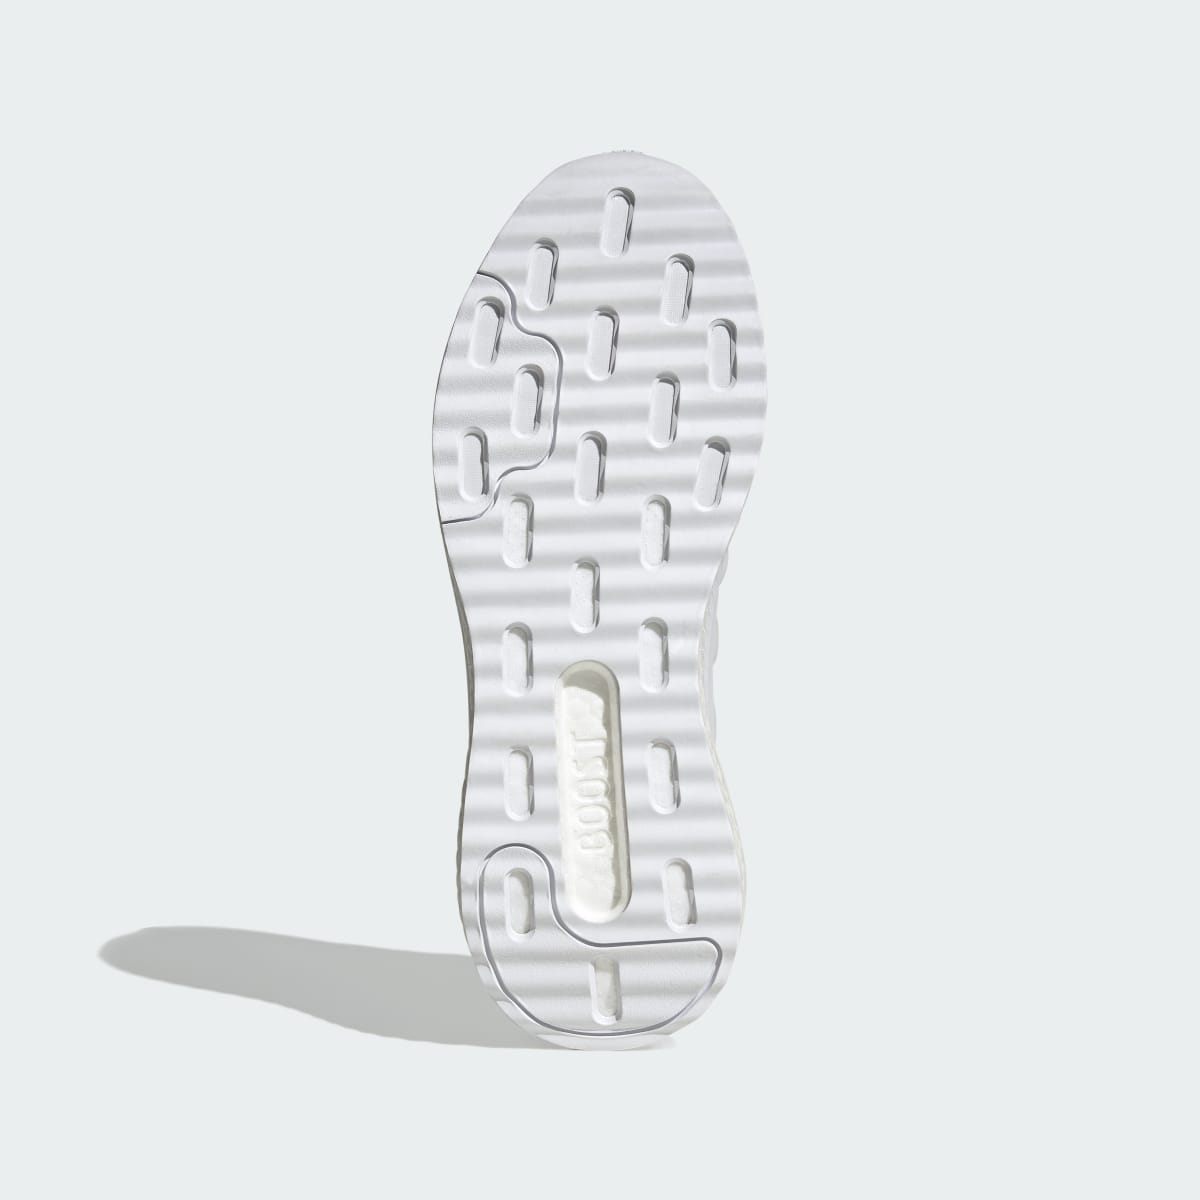 Adidas X_PLRPHASE Schuh. 4